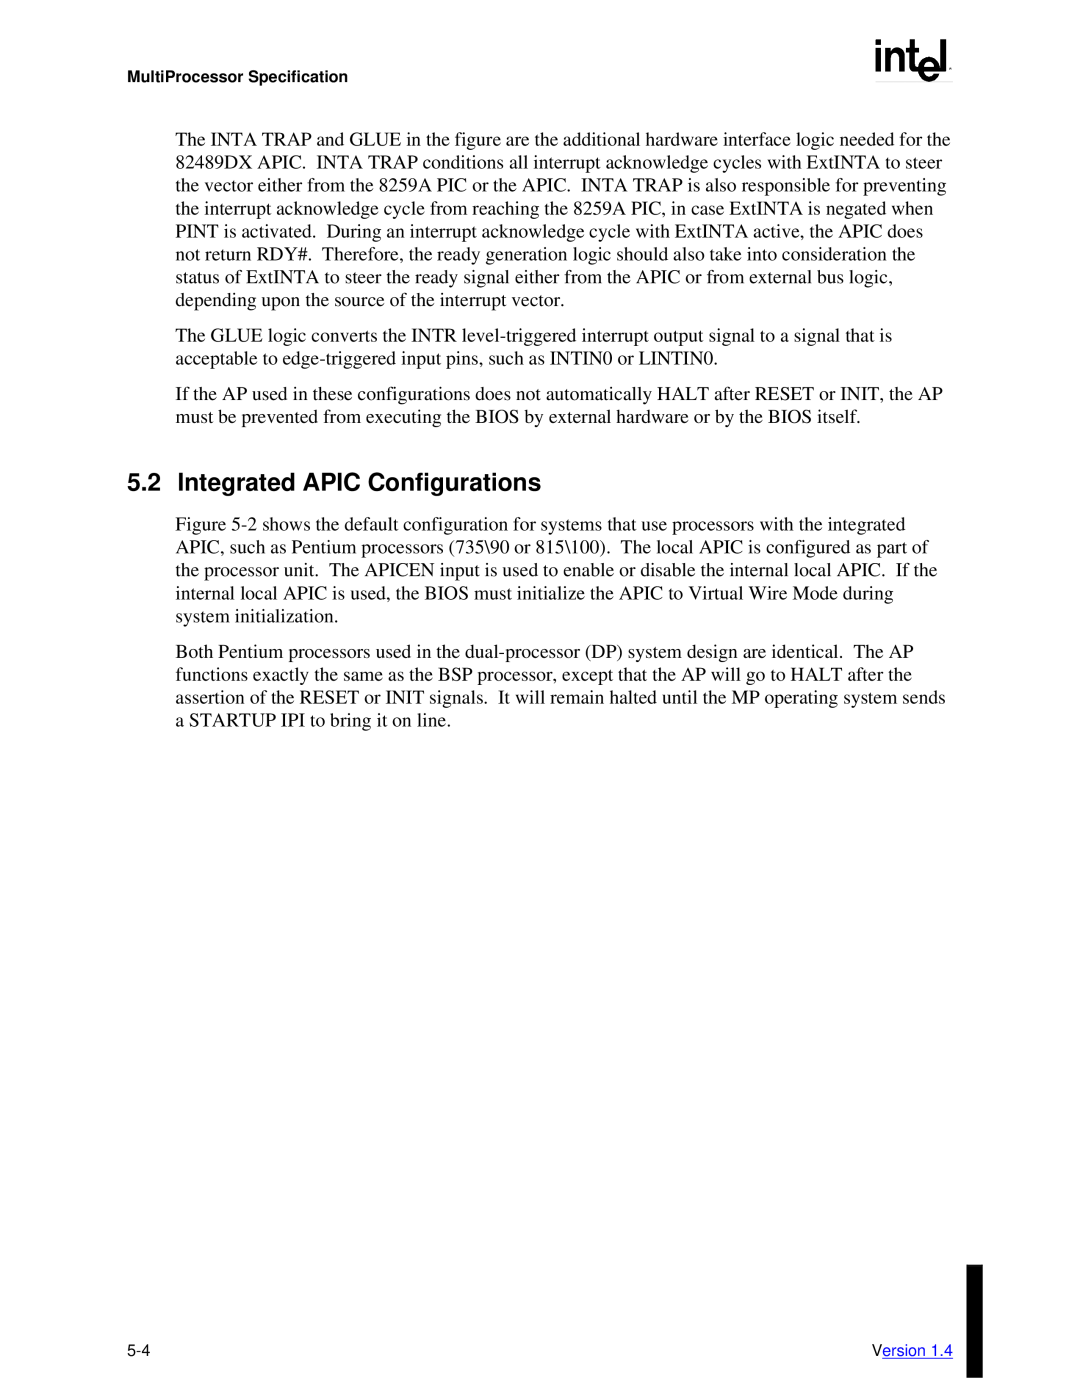 Intel MultiProcessor manual Integrated APIC Configurations 